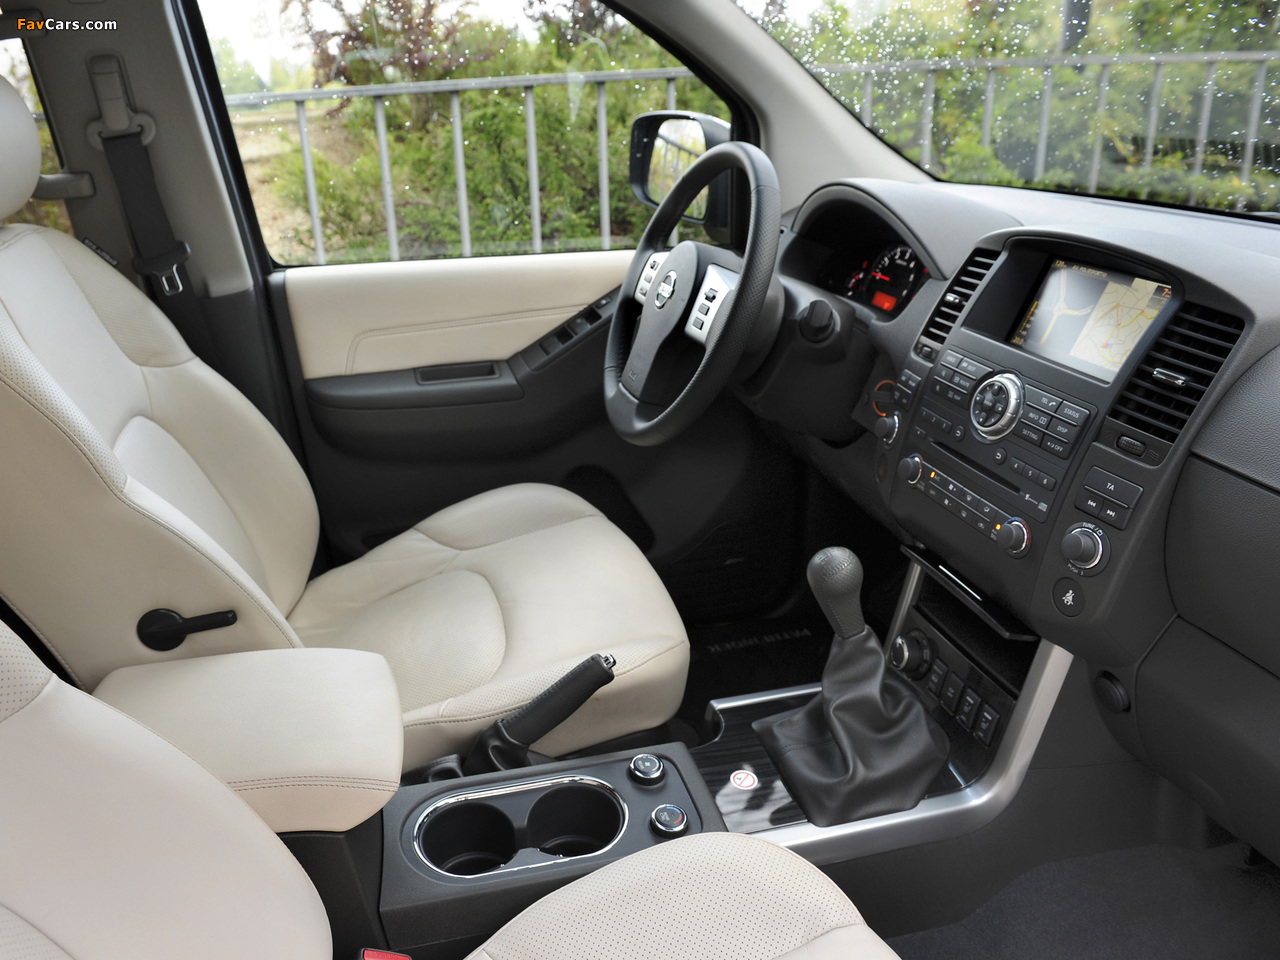 Nissan Pathfinder (R51) 2010 images (1280 x 960)